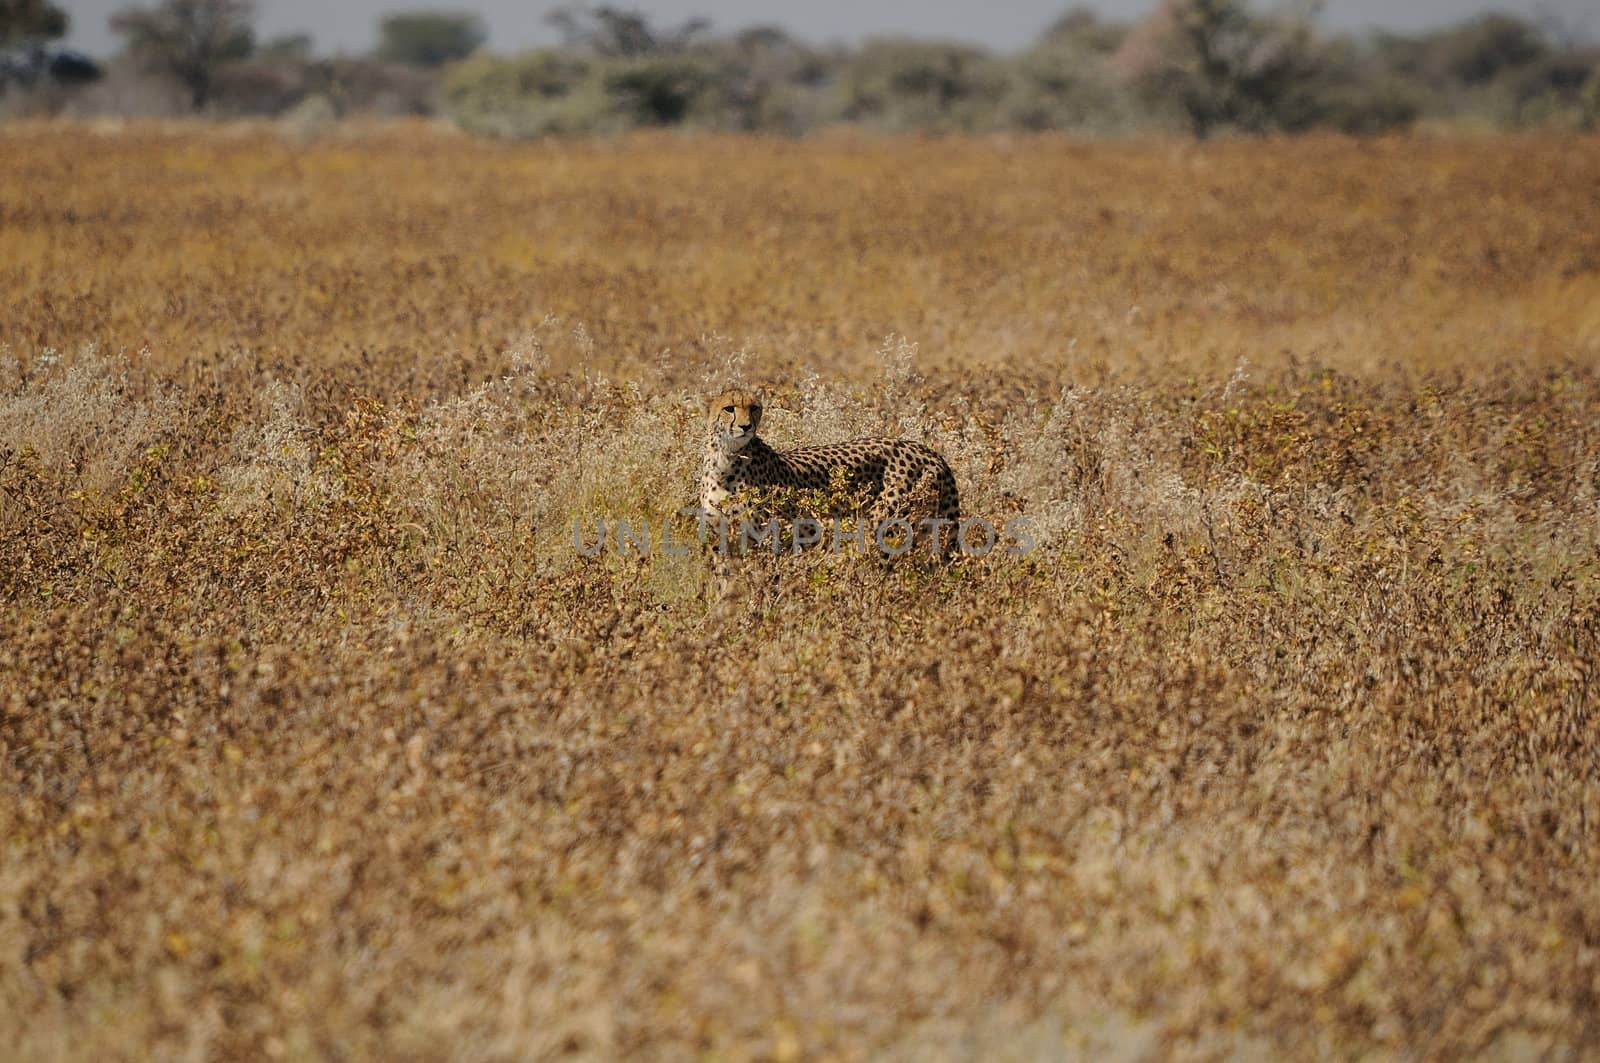 A Cheetah, Acinonyx jubatus in the Etosha National Park, Namibia